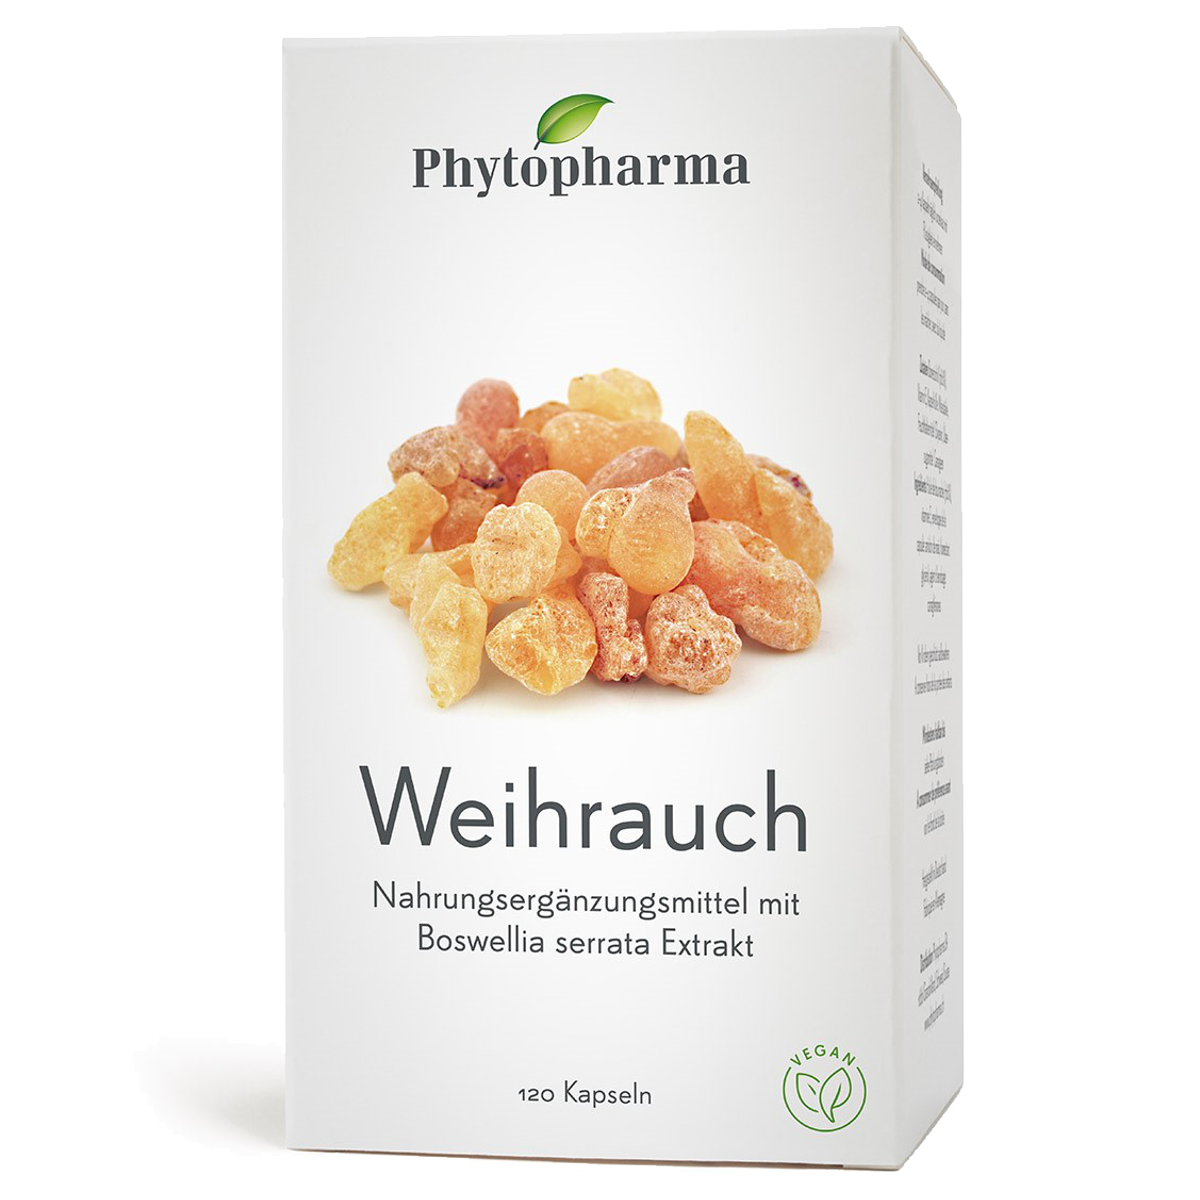 Phytopharma Weihrauch Kapseln Dose 120 Stück